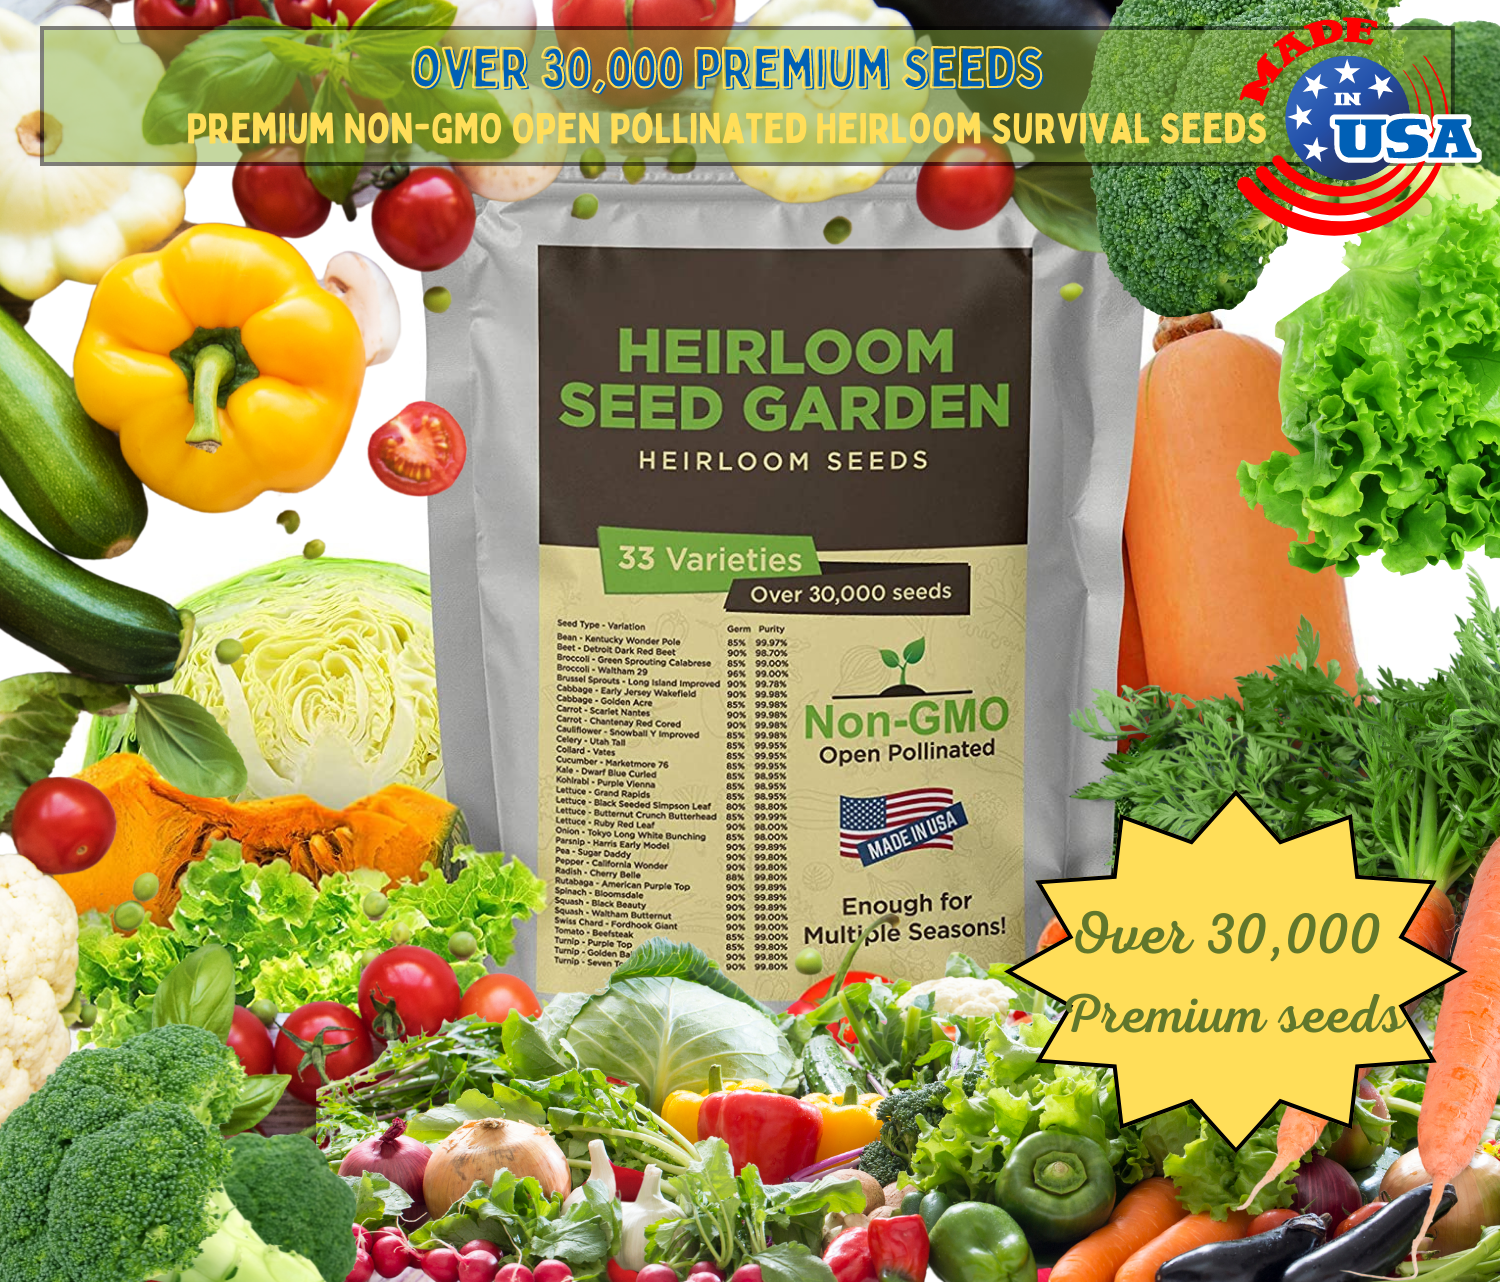 Premium Non-GMO Open Pollinated Heirloom survival seeds